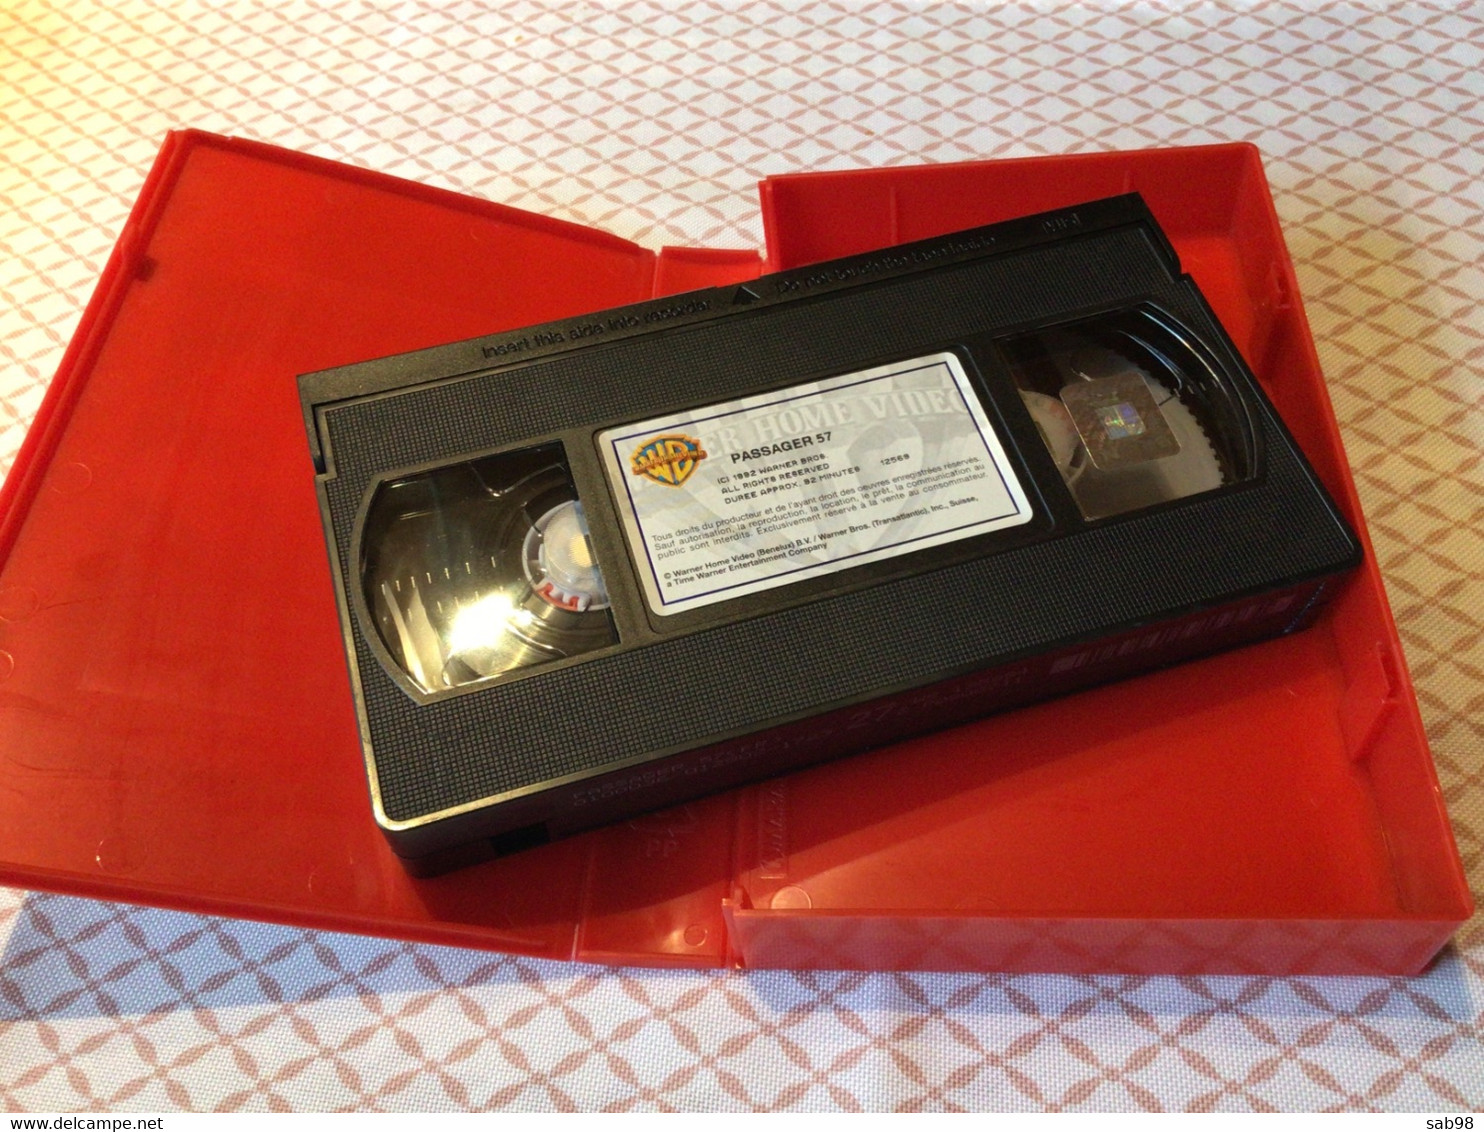 Passager 57 Wesley Snipe VHS Originale Action Collection De 1995  Warner Bros - Action, Aventure